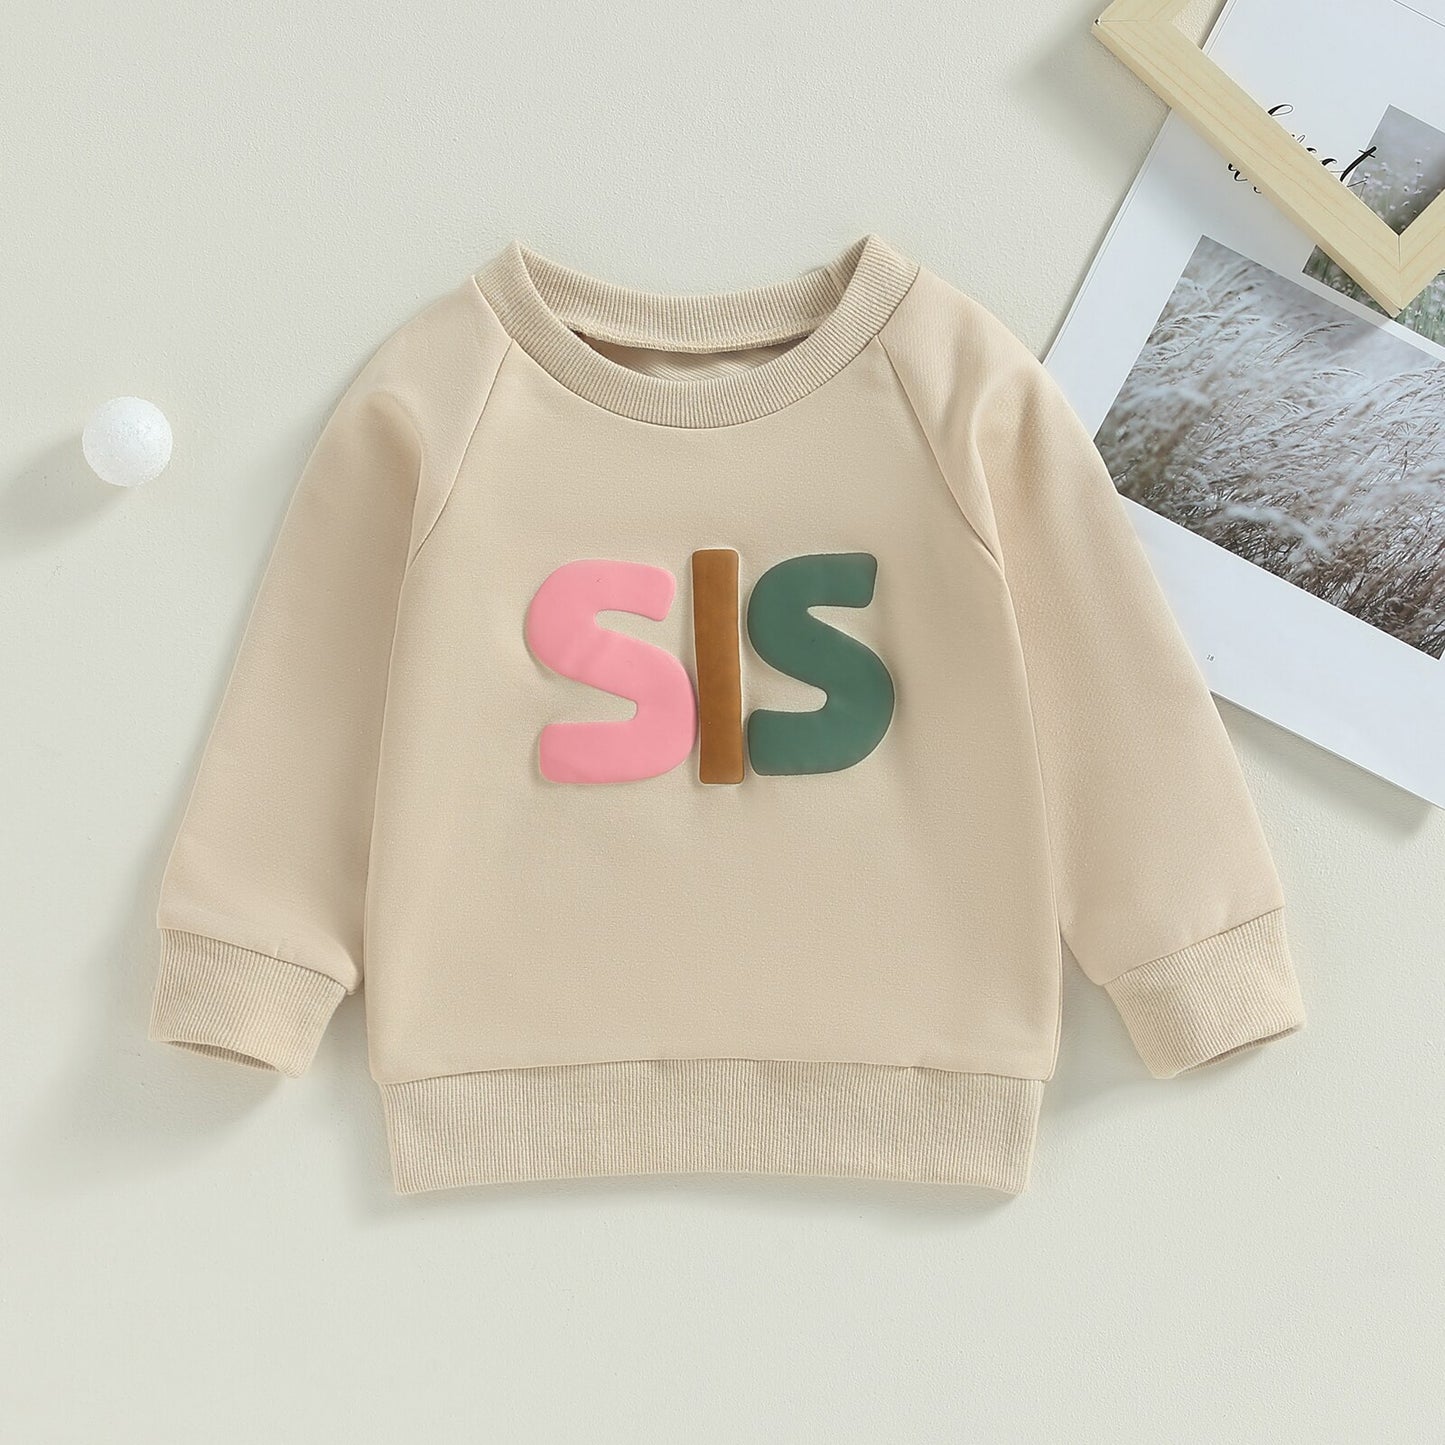 Matching Bro/Sis Sweatshirts